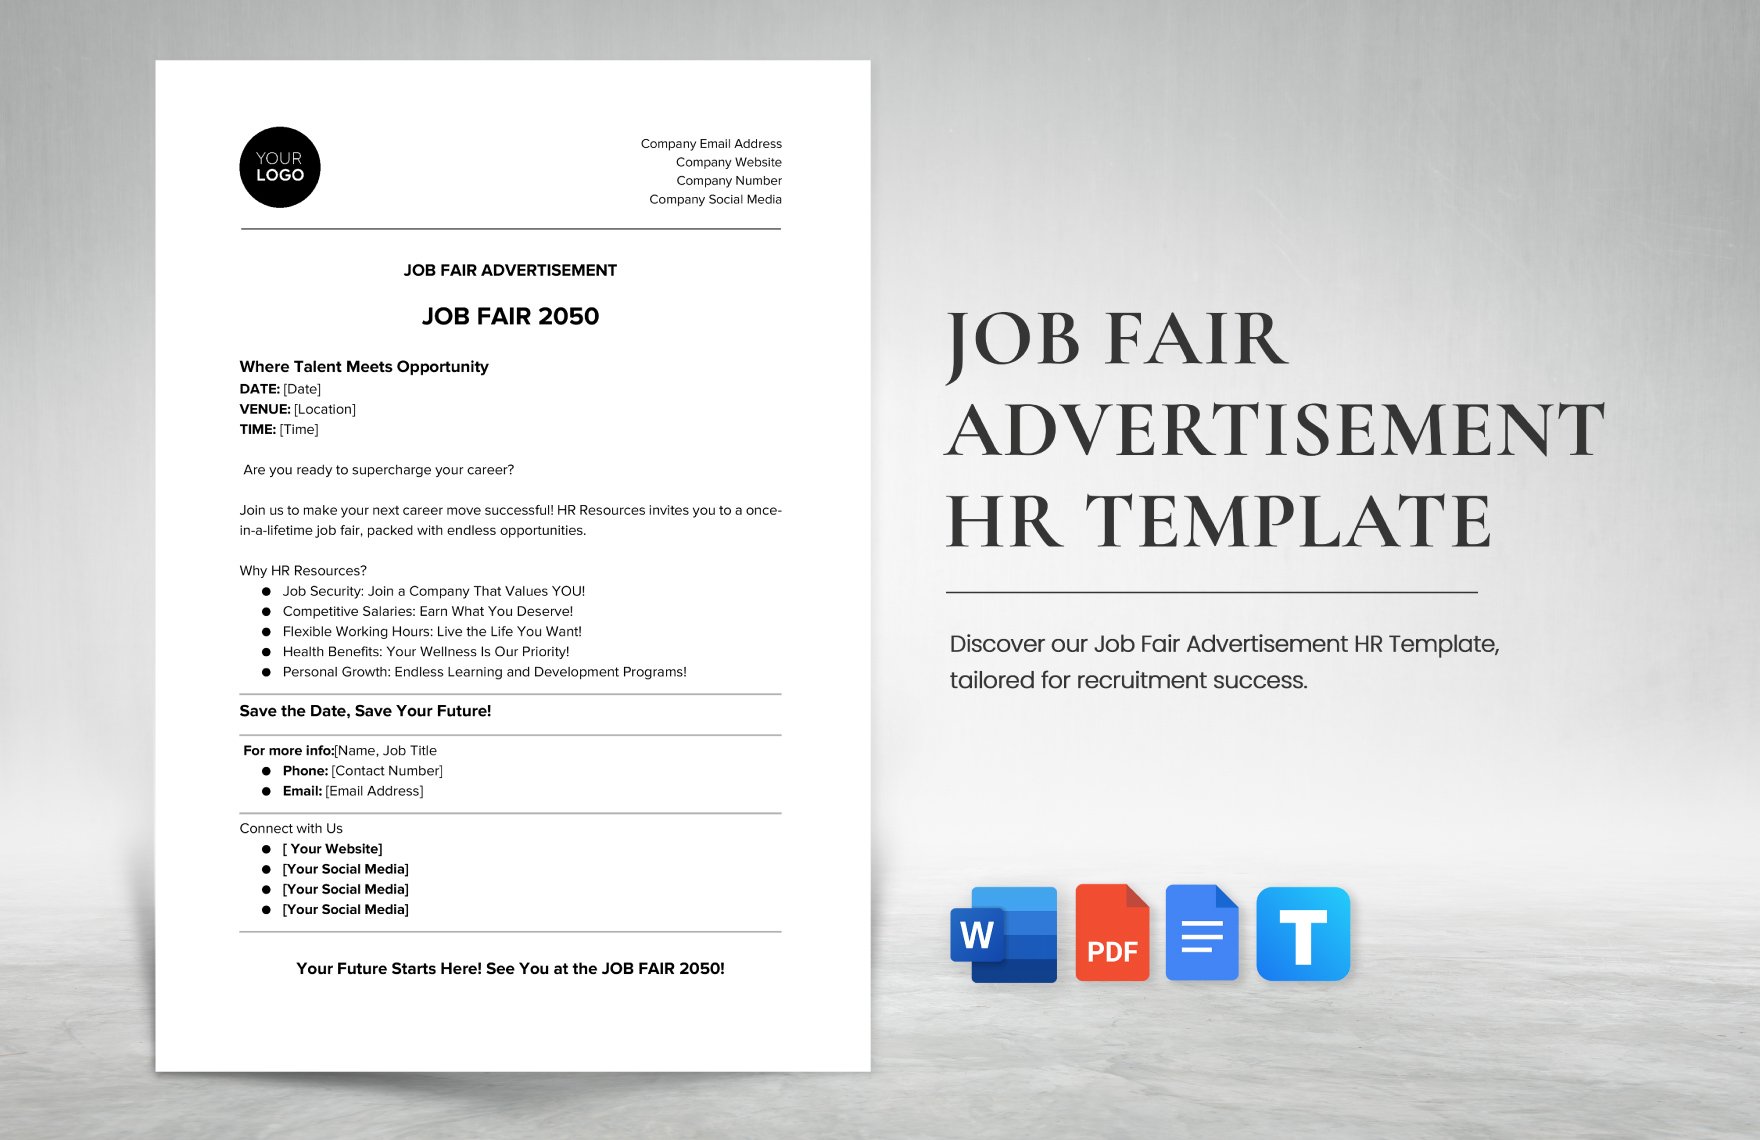 Job Fair Advertisement HR Template in Word, Google Docs, PDF